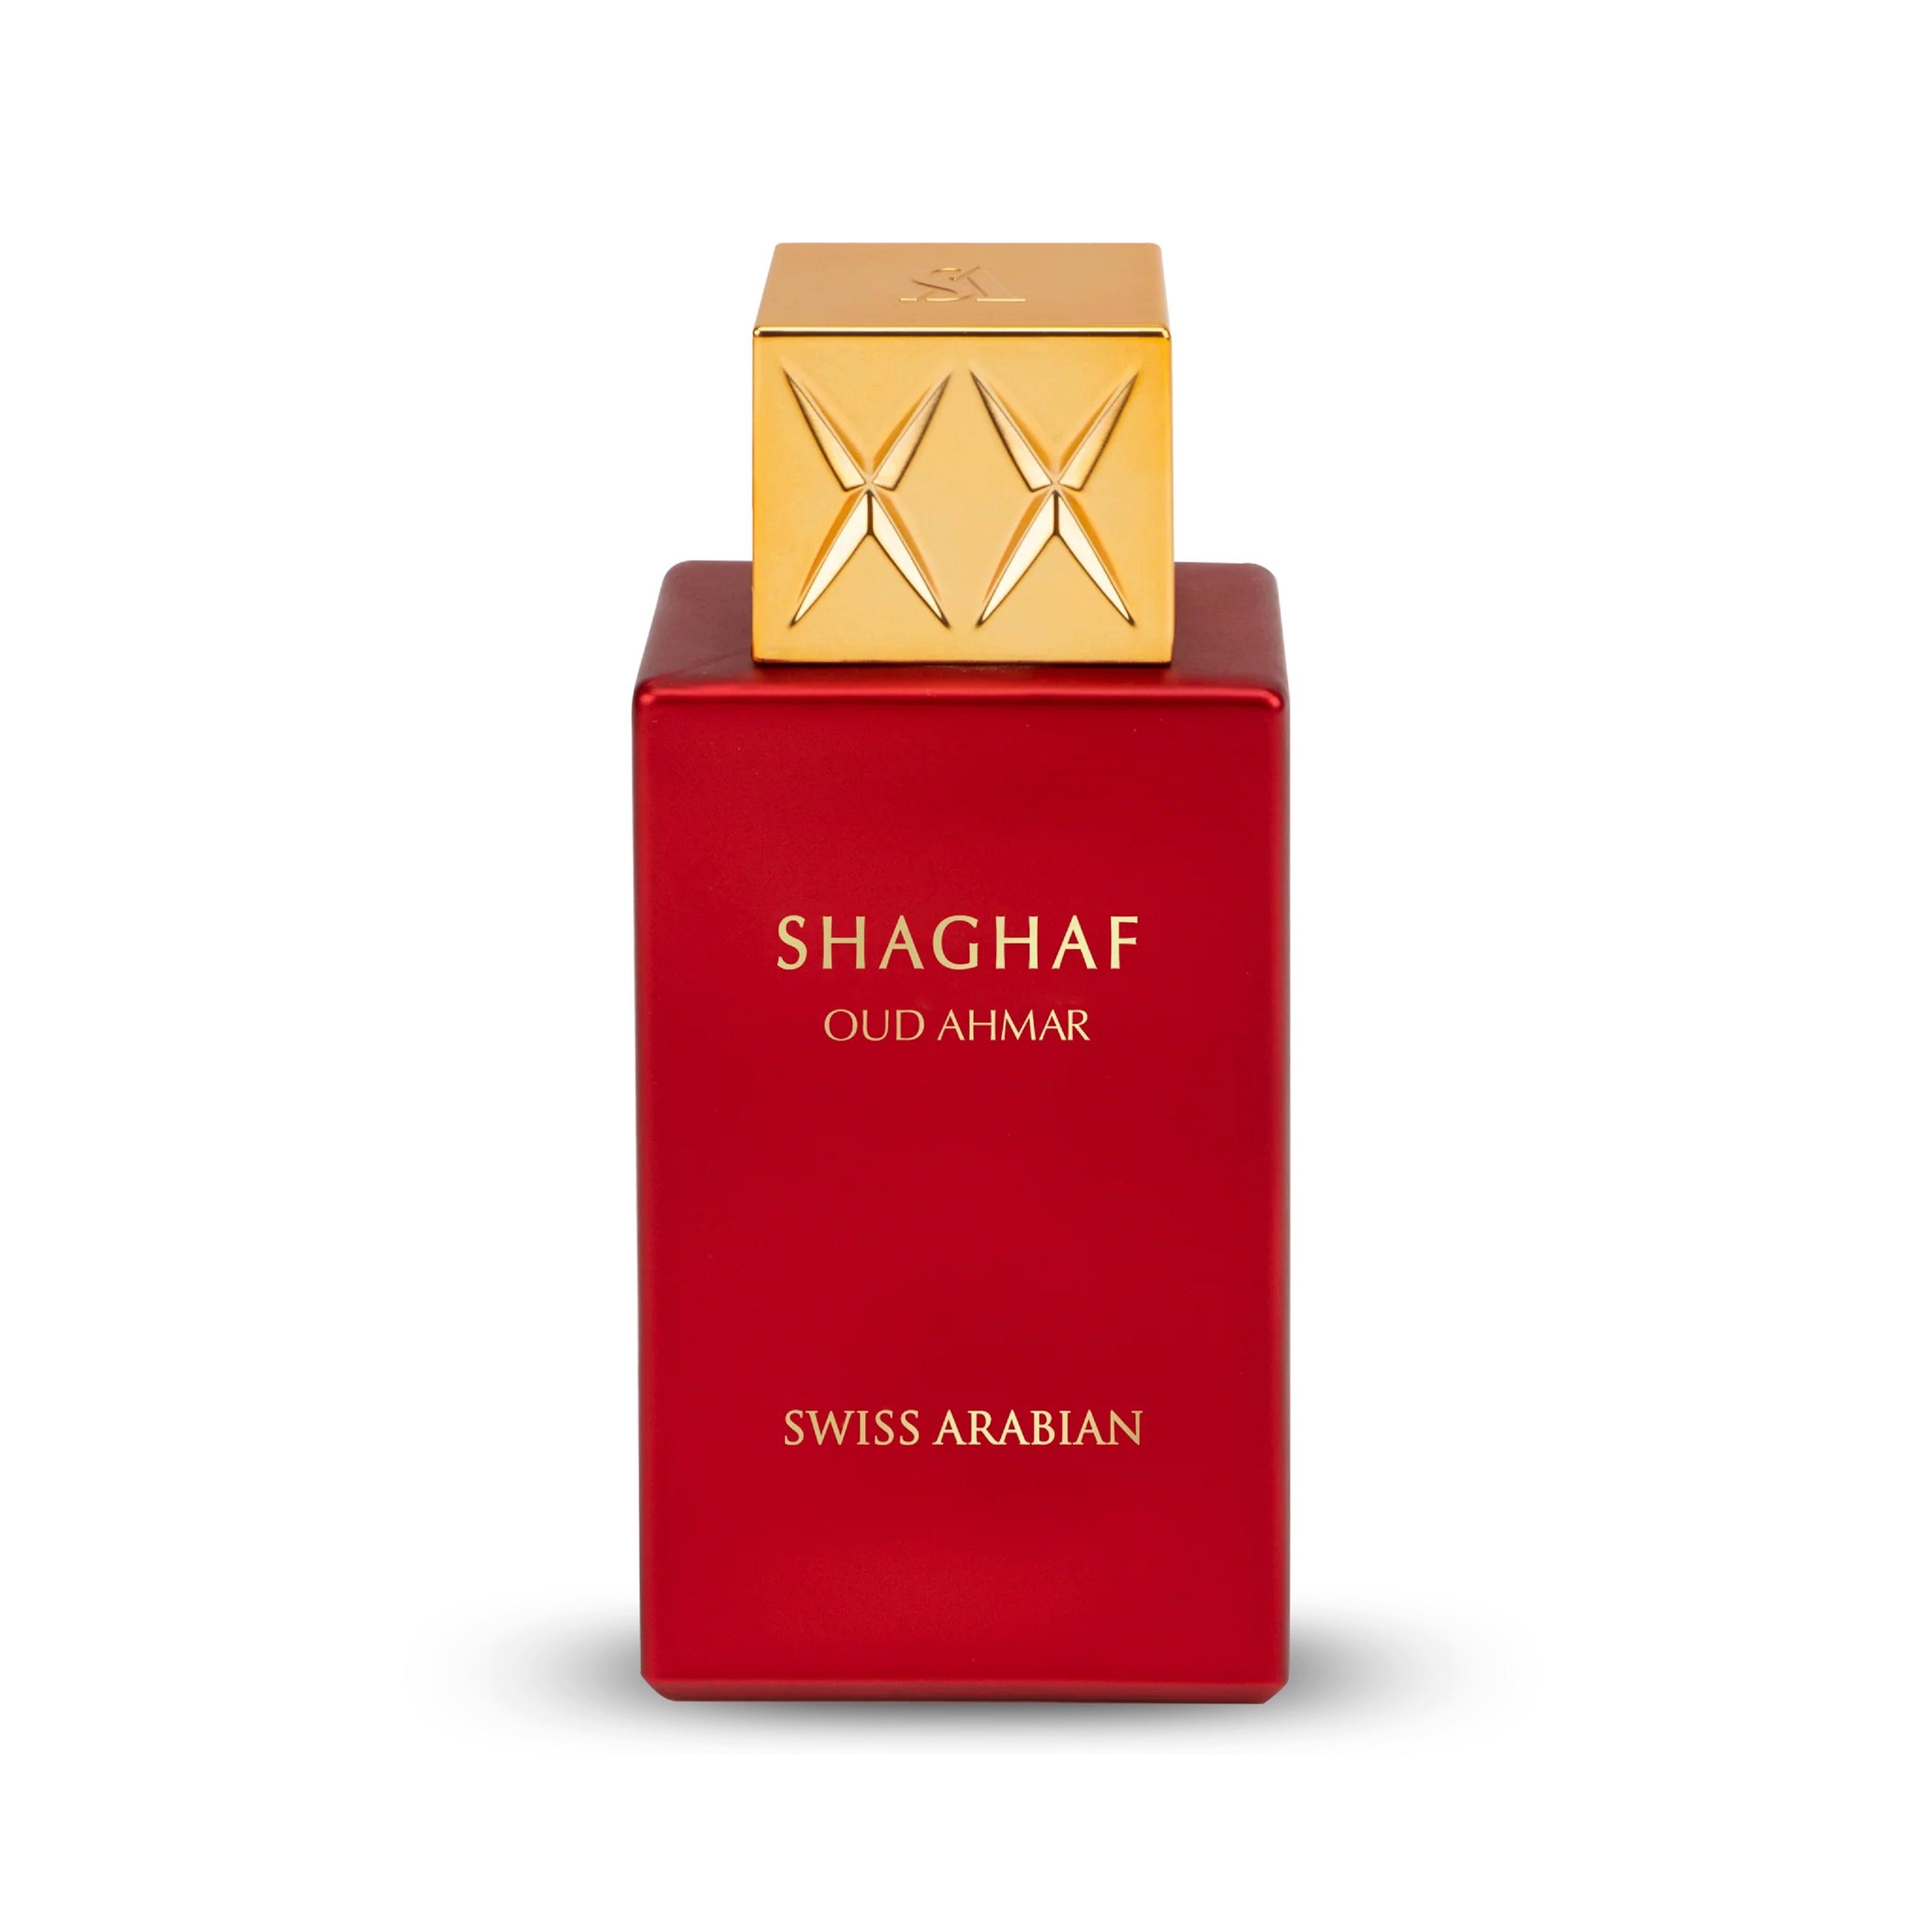 Parfum de AHMAR Eau Arabian Arabian Oud 75ml Parfum Shaghaf Limited Swiss Edition Eau de Swiss